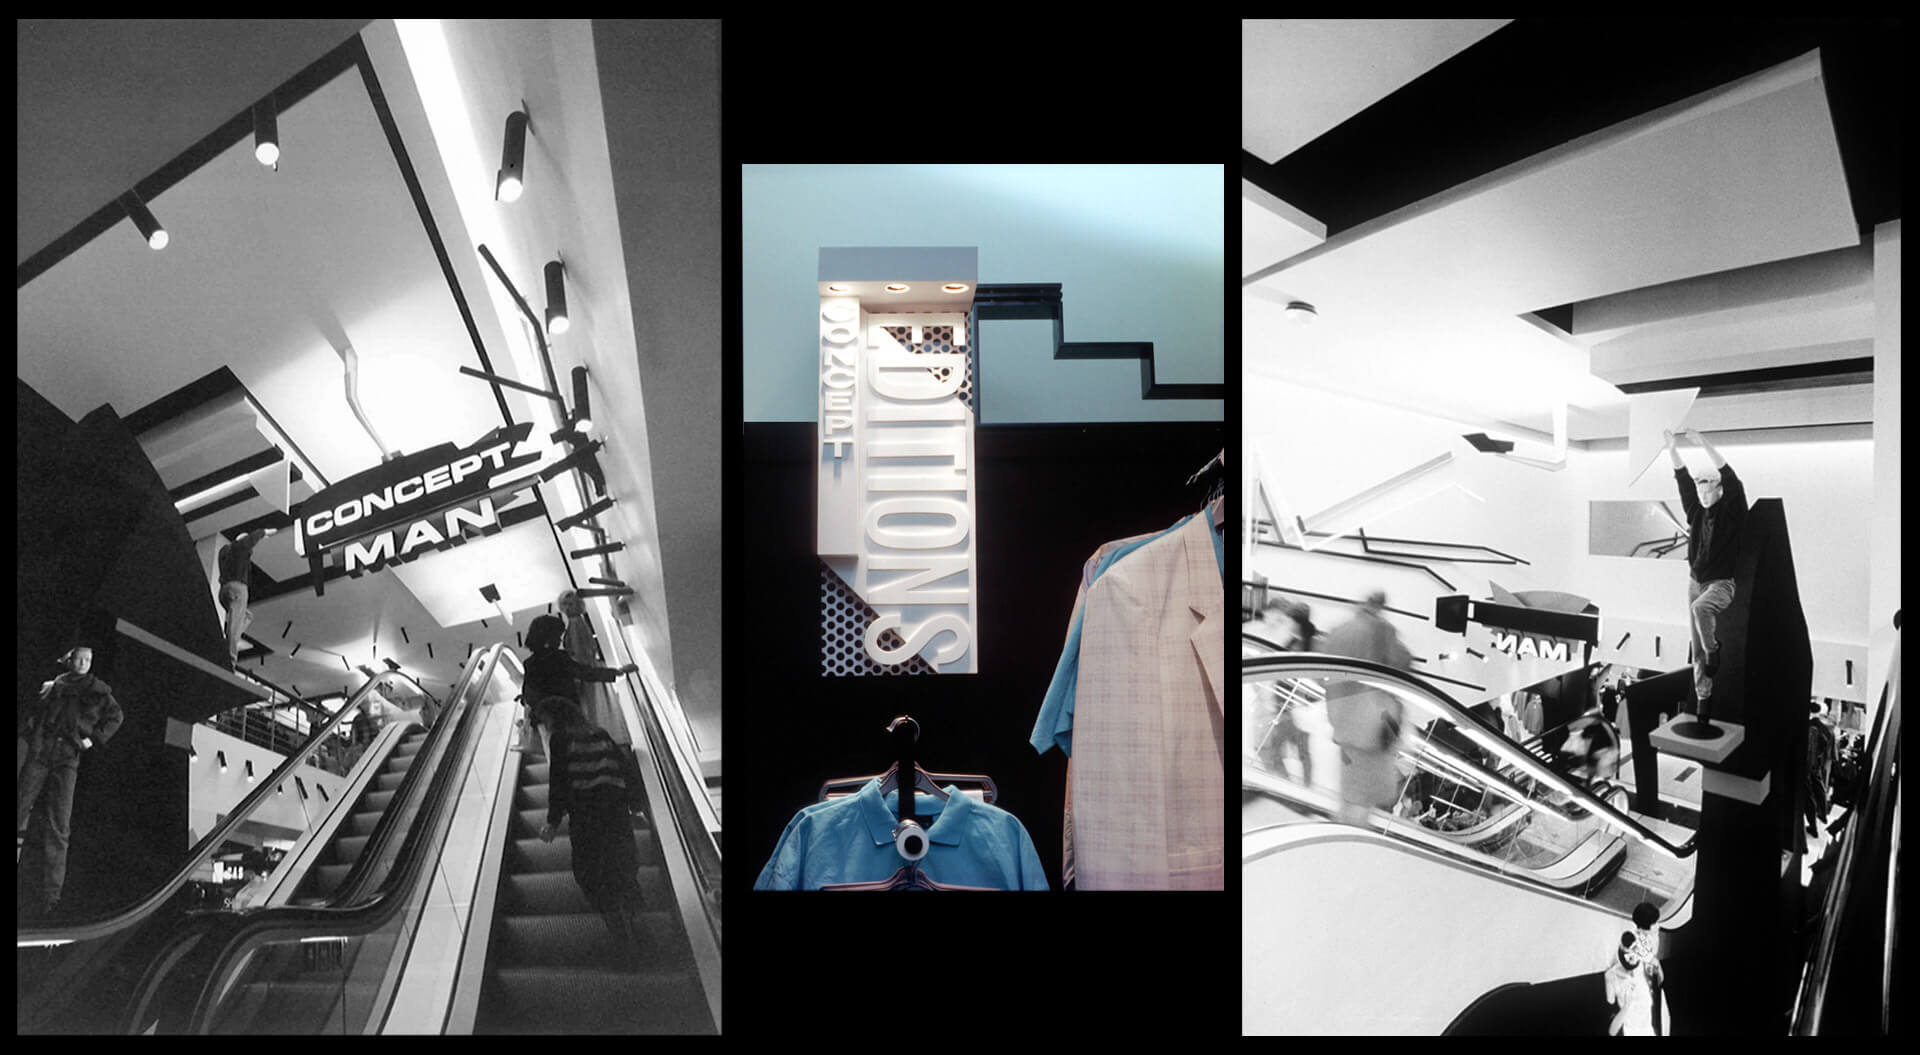 Concept Man brand interior store design merchandising systems internal brand signage for shop escalators